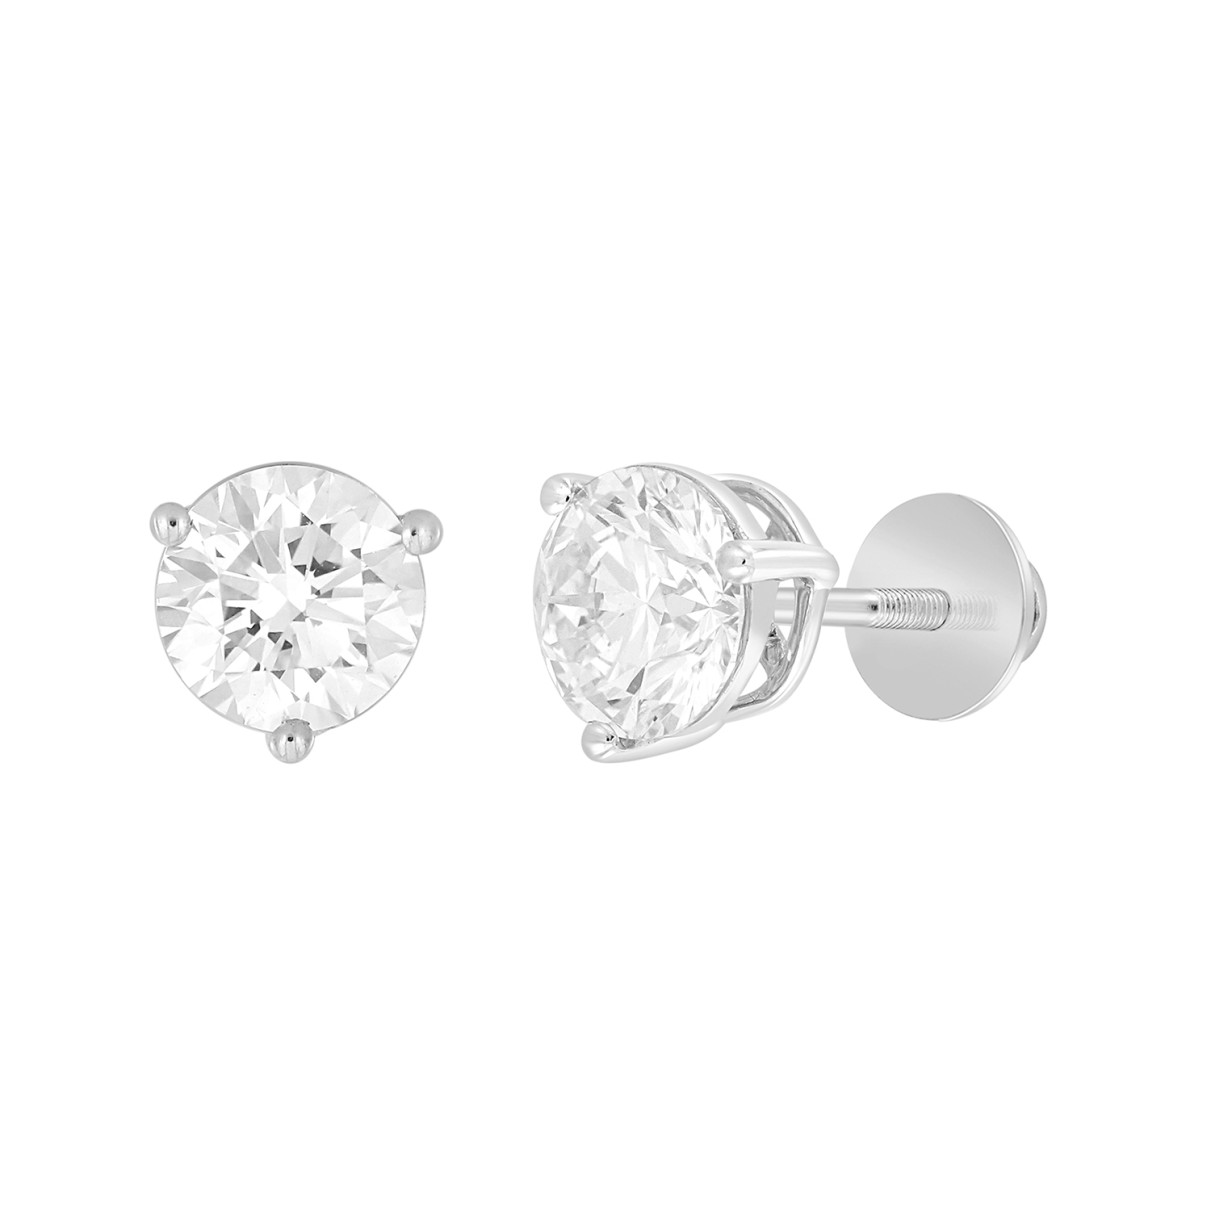 LADIES SOLITAIRE EARRINGS 4CT ROUND DIAMOND 14K WHITE GOLD (CENTER STONE ROUND DIAMOND 2CT )